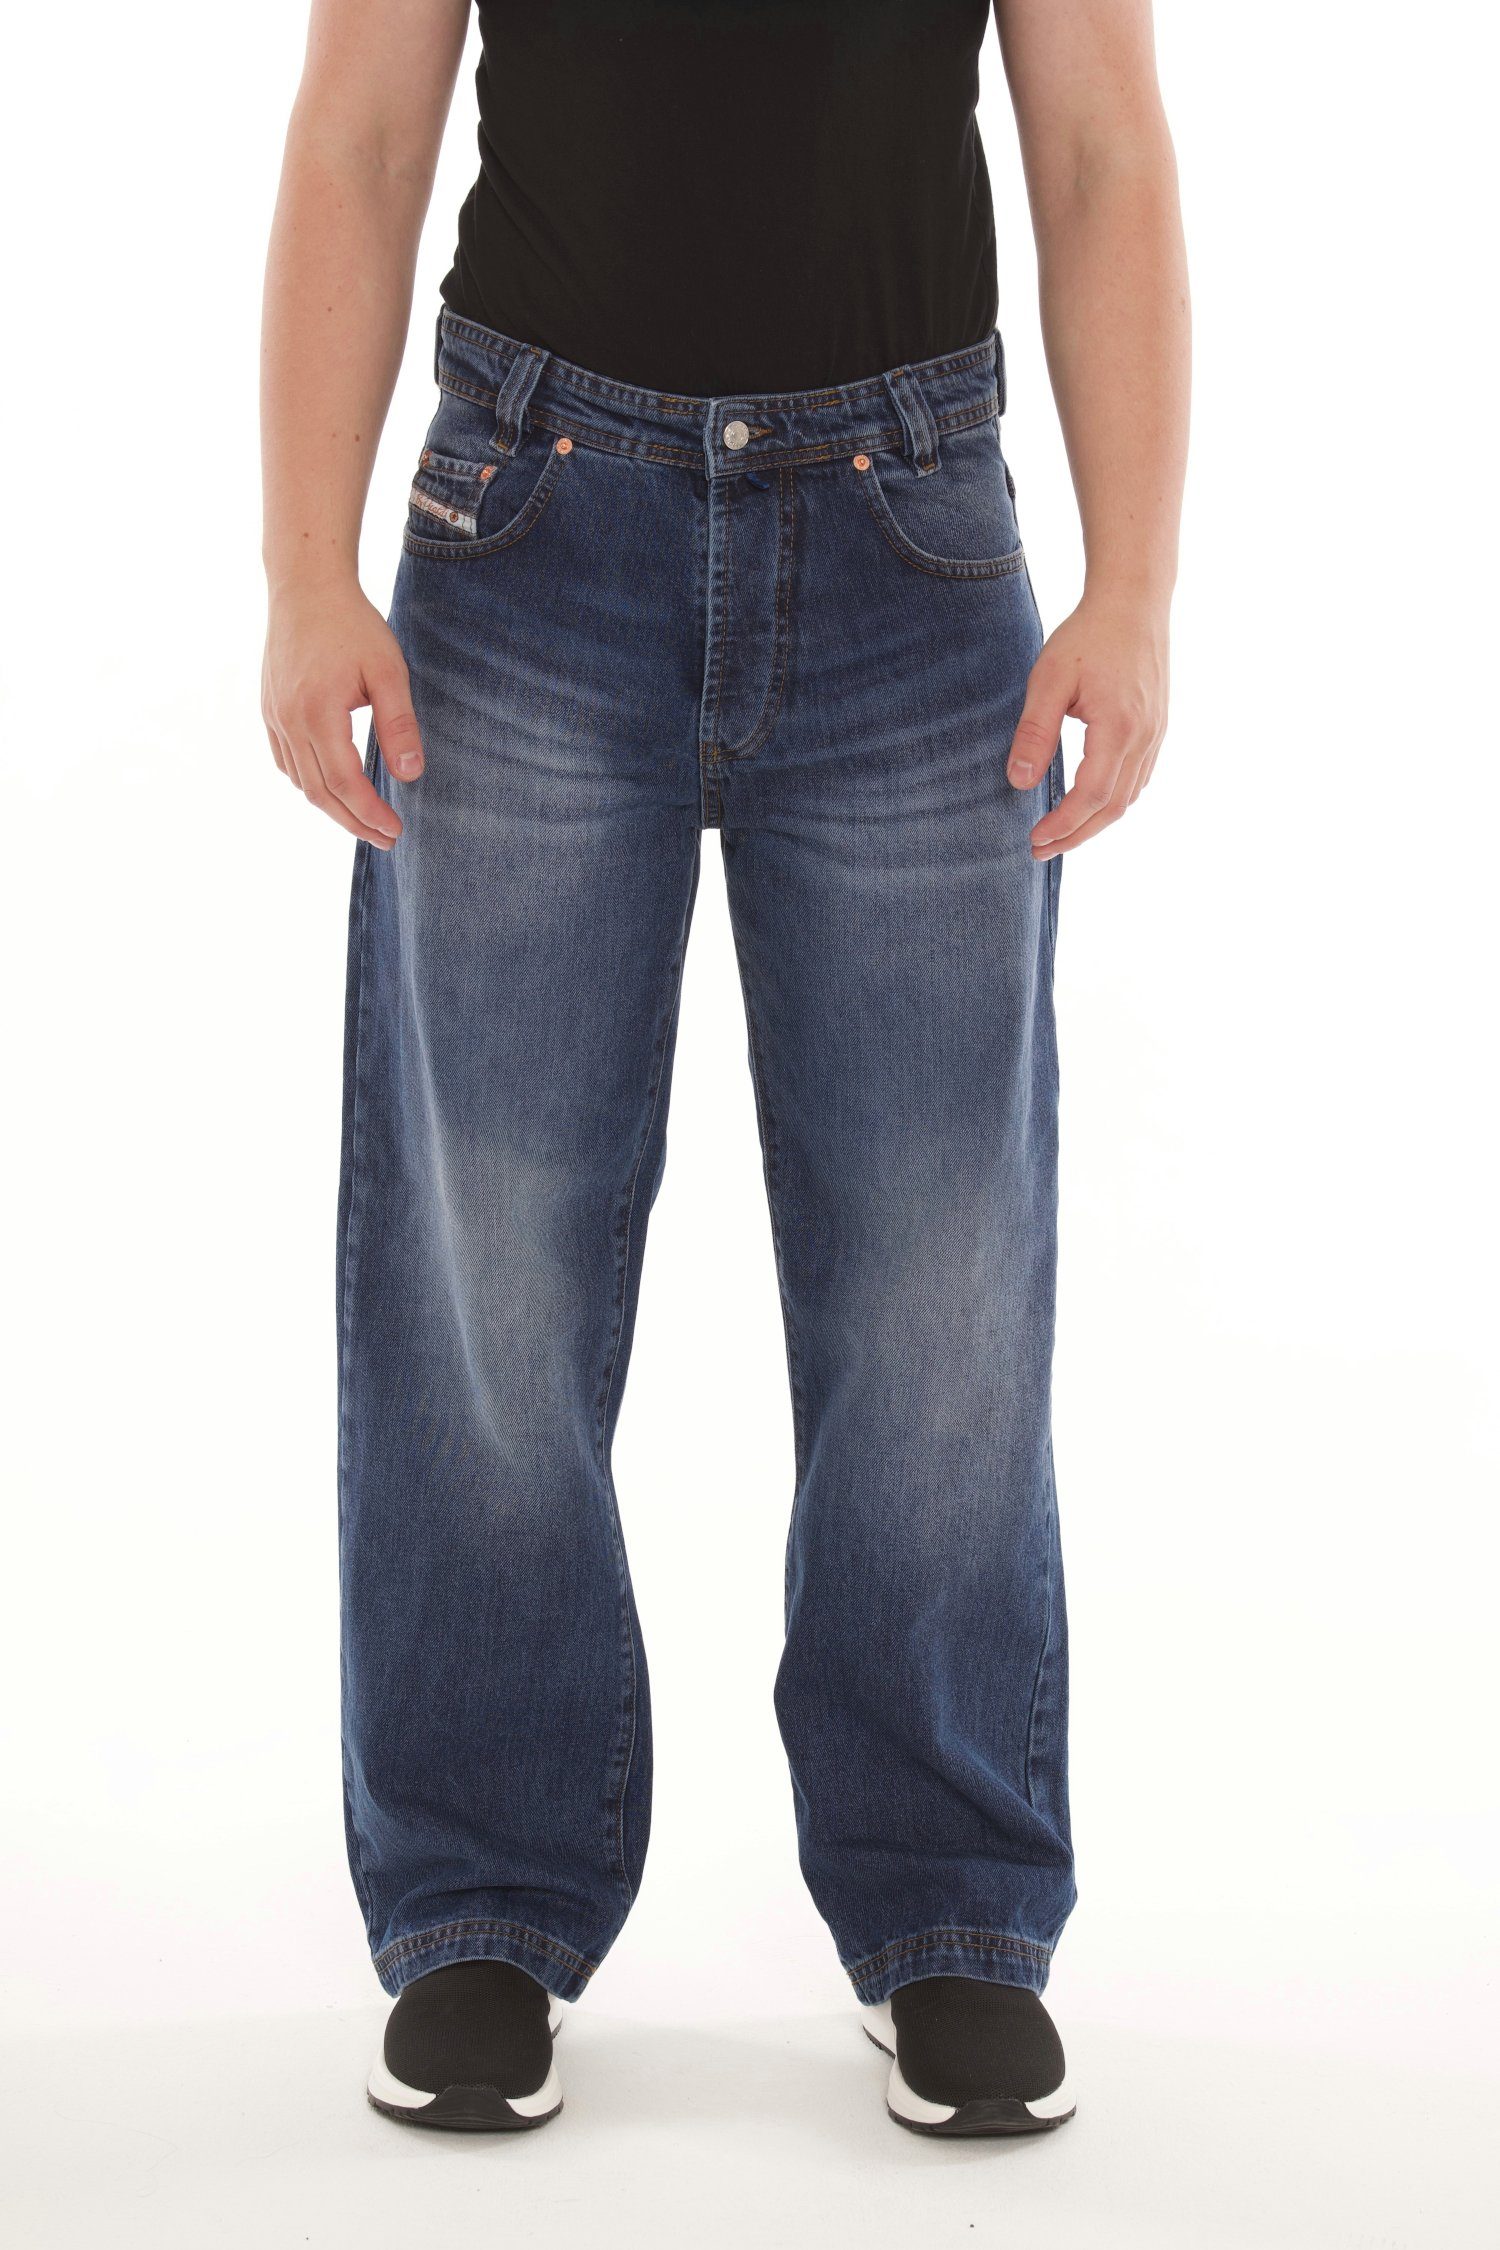 PICALDI Jeans Weite Straight Zicco Tindery Baggy Fit, 474 Schnitt Gerader Leg, Jeans lässiger